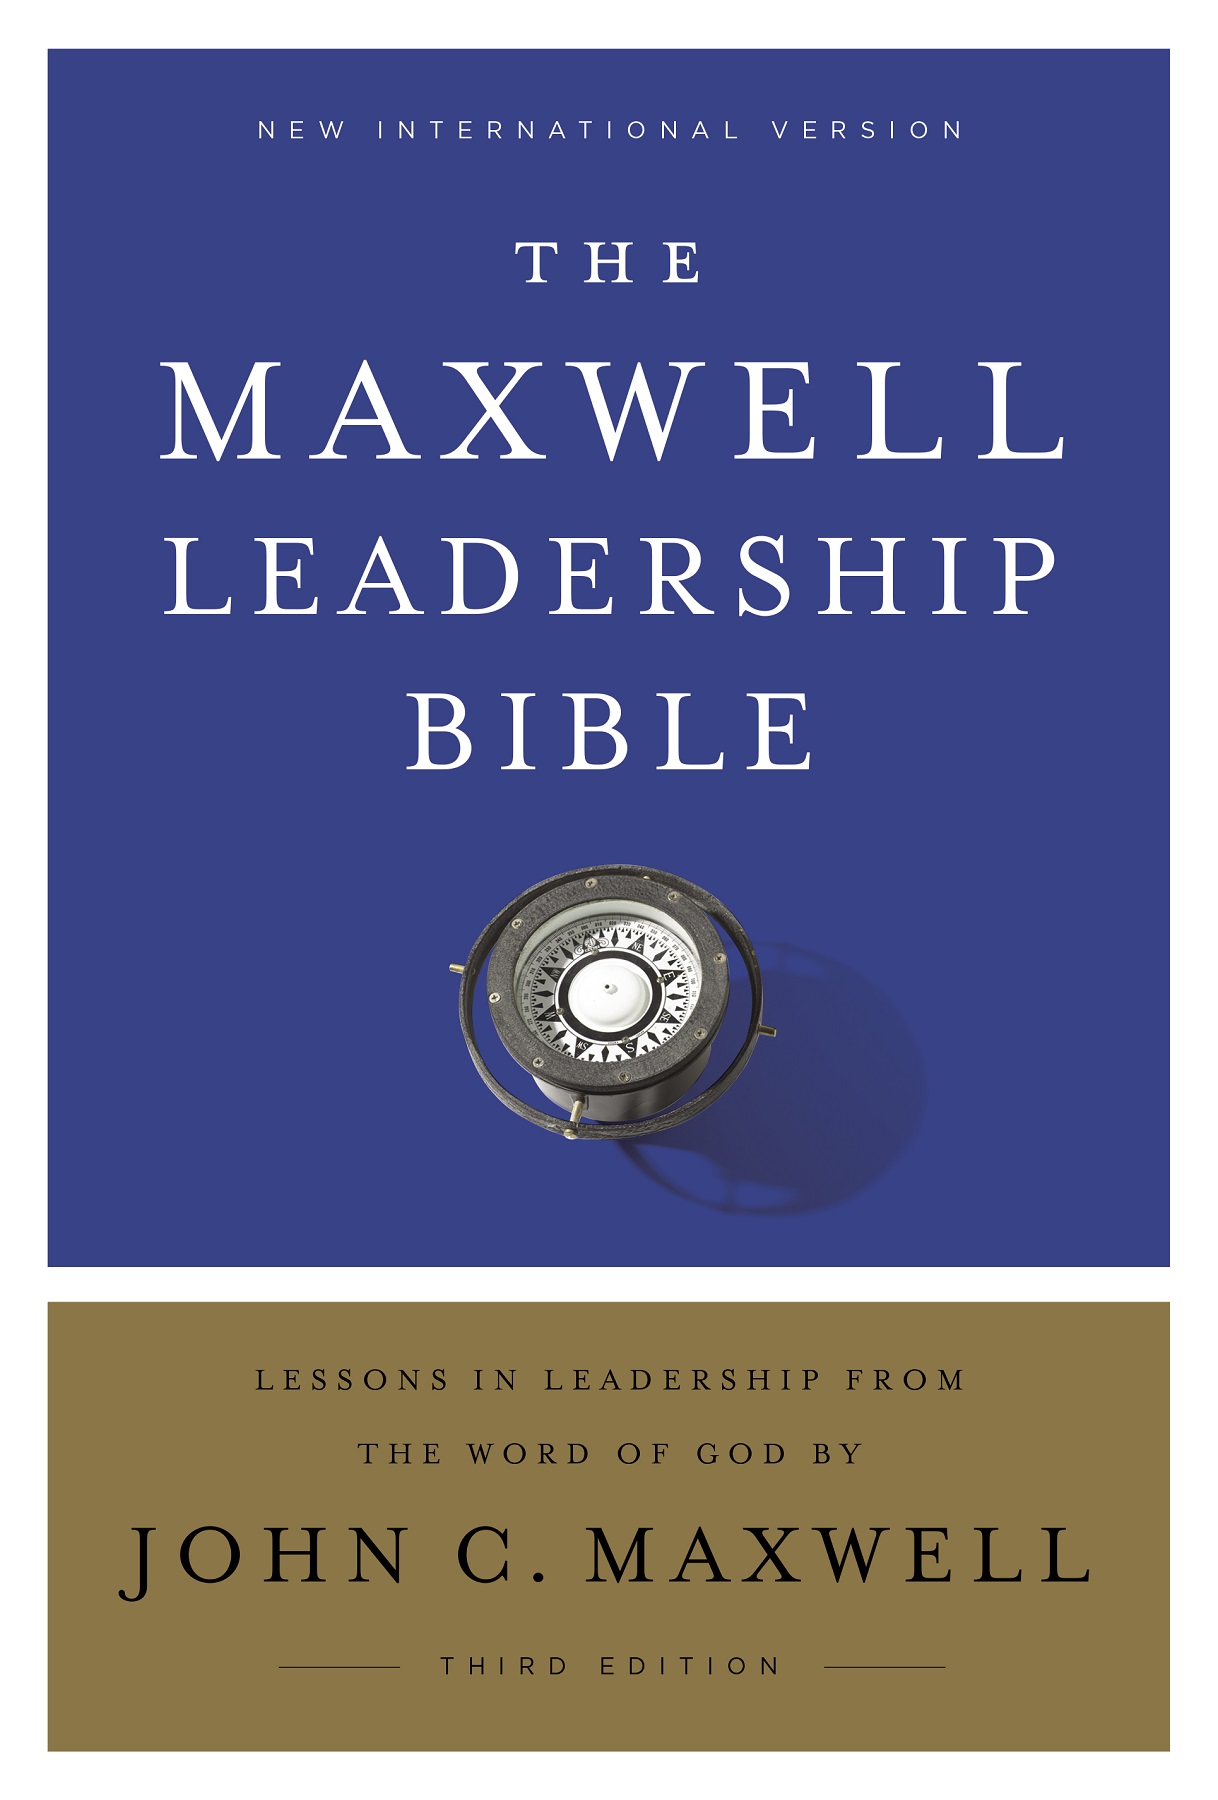 NIV Maxwell Leadership Bible 3rd Edition - image 1